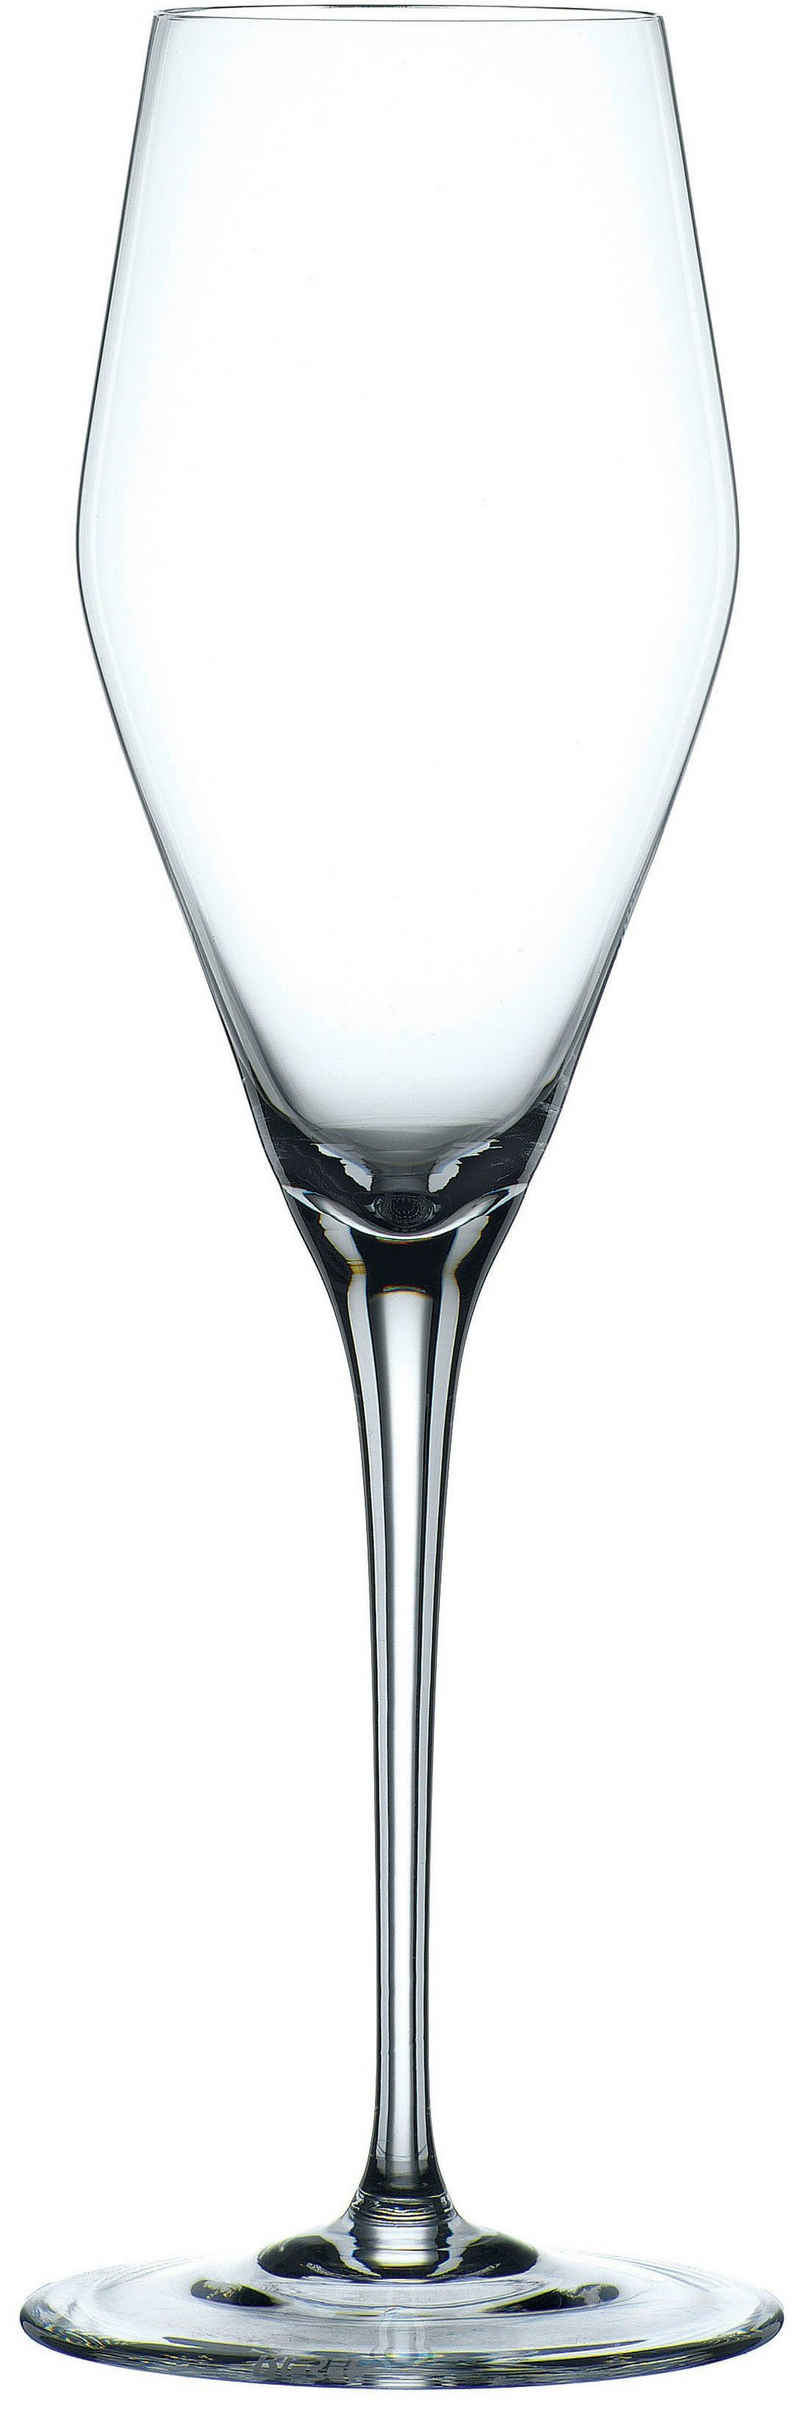 Nachtmann Champagnerglas ViNova, Kristallglas, 280 ml, Made in Germany, 4-teilig